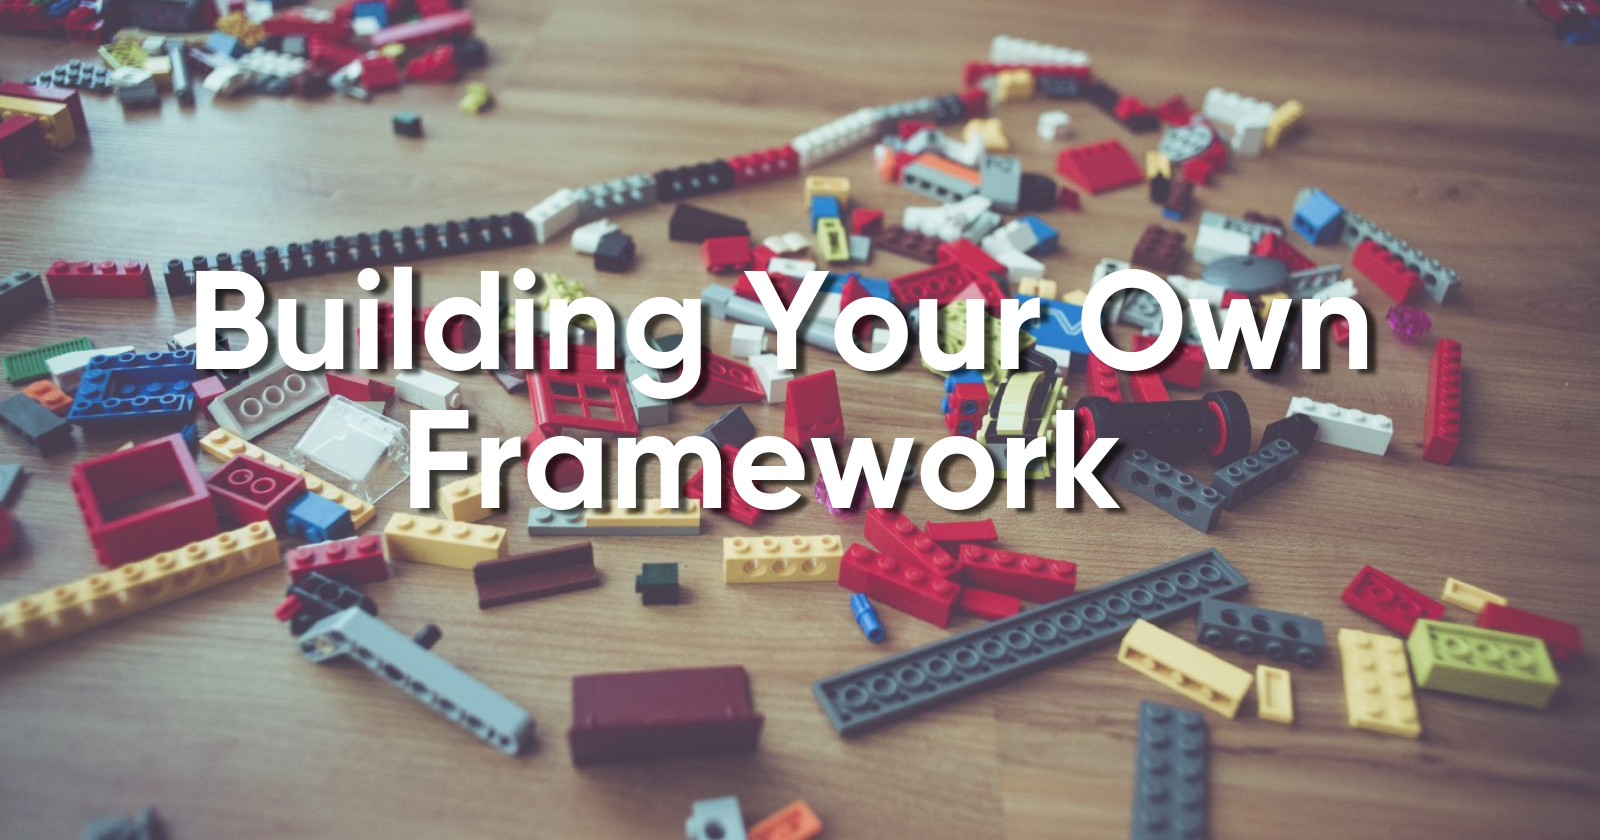 Building your own framework